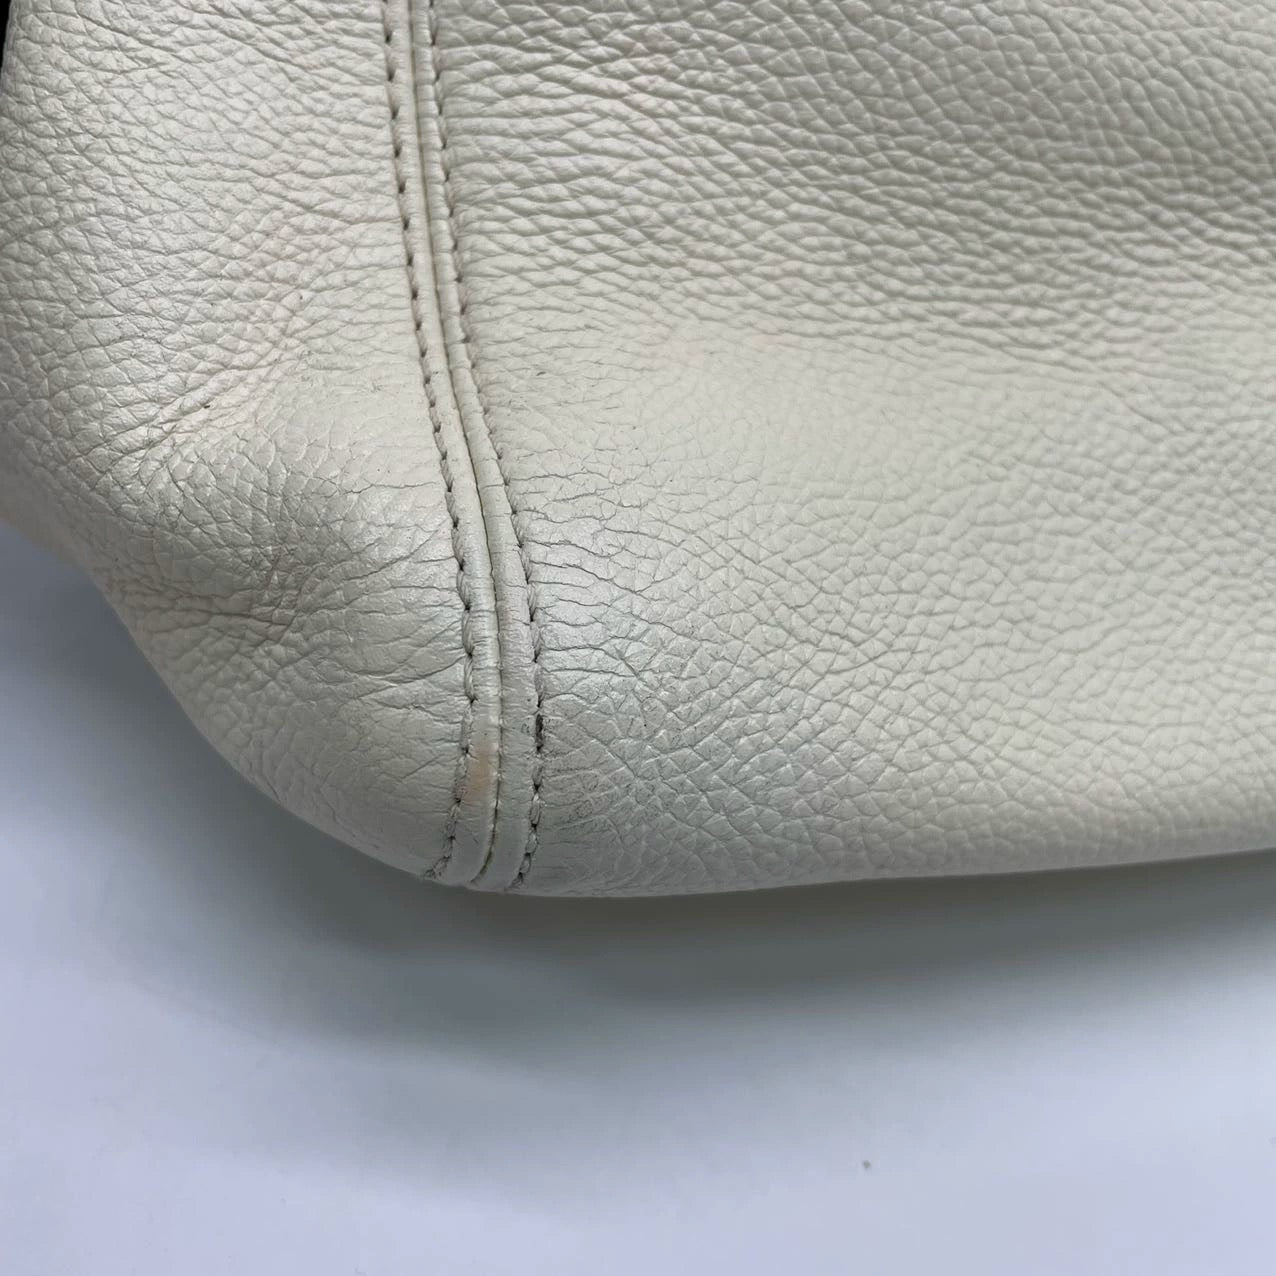 Chanel Cerf Executive East West Small White Caviar Leather Handbag